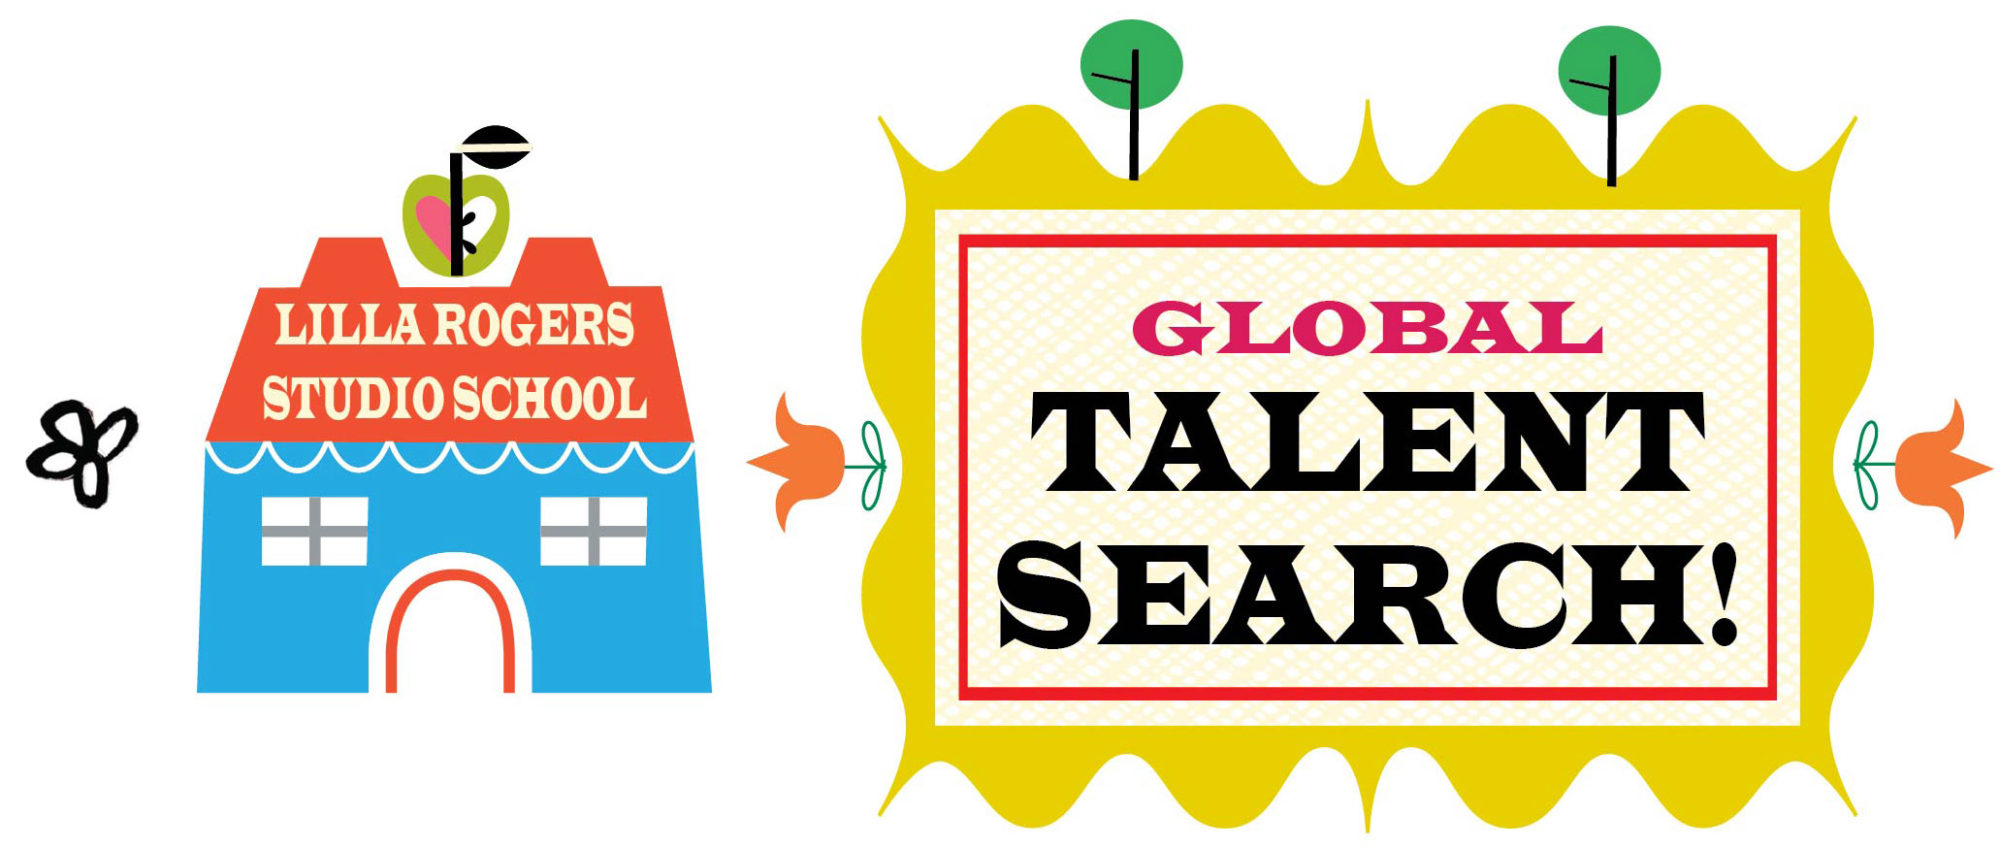 Lilla Rogers Global Talent Search